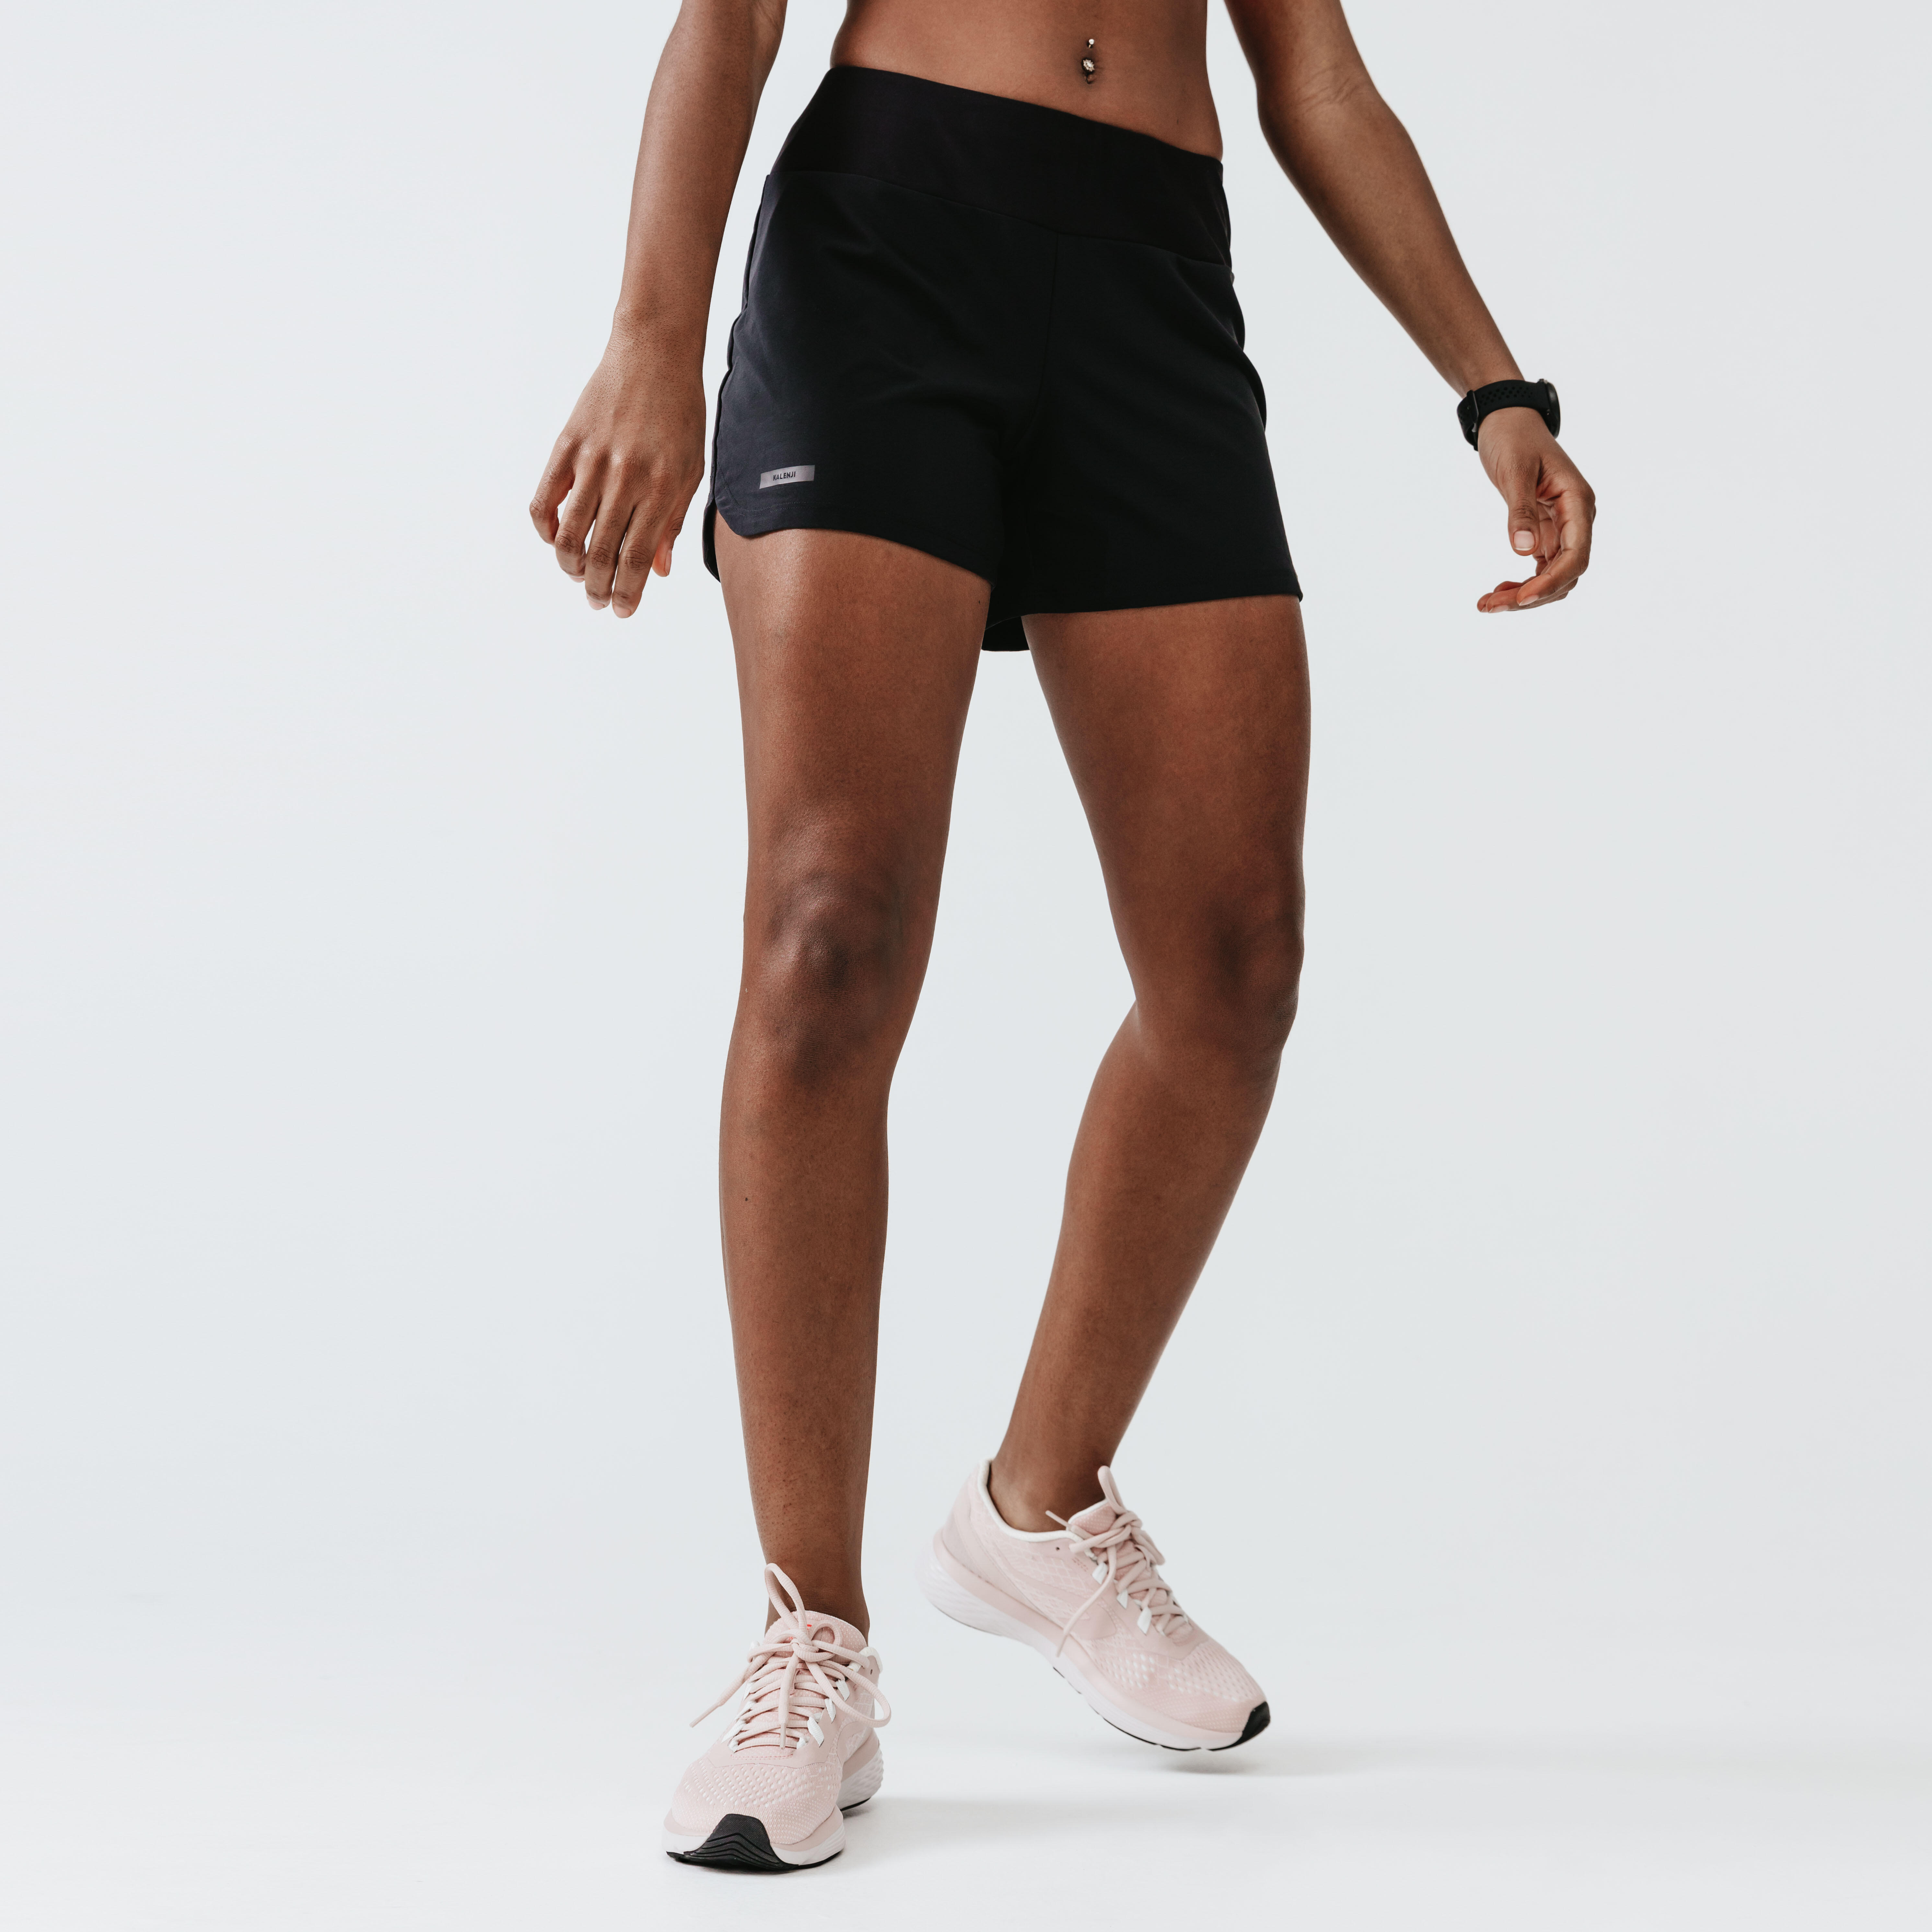 Buy Women's Running Shorts Dry Black Online Decathlon